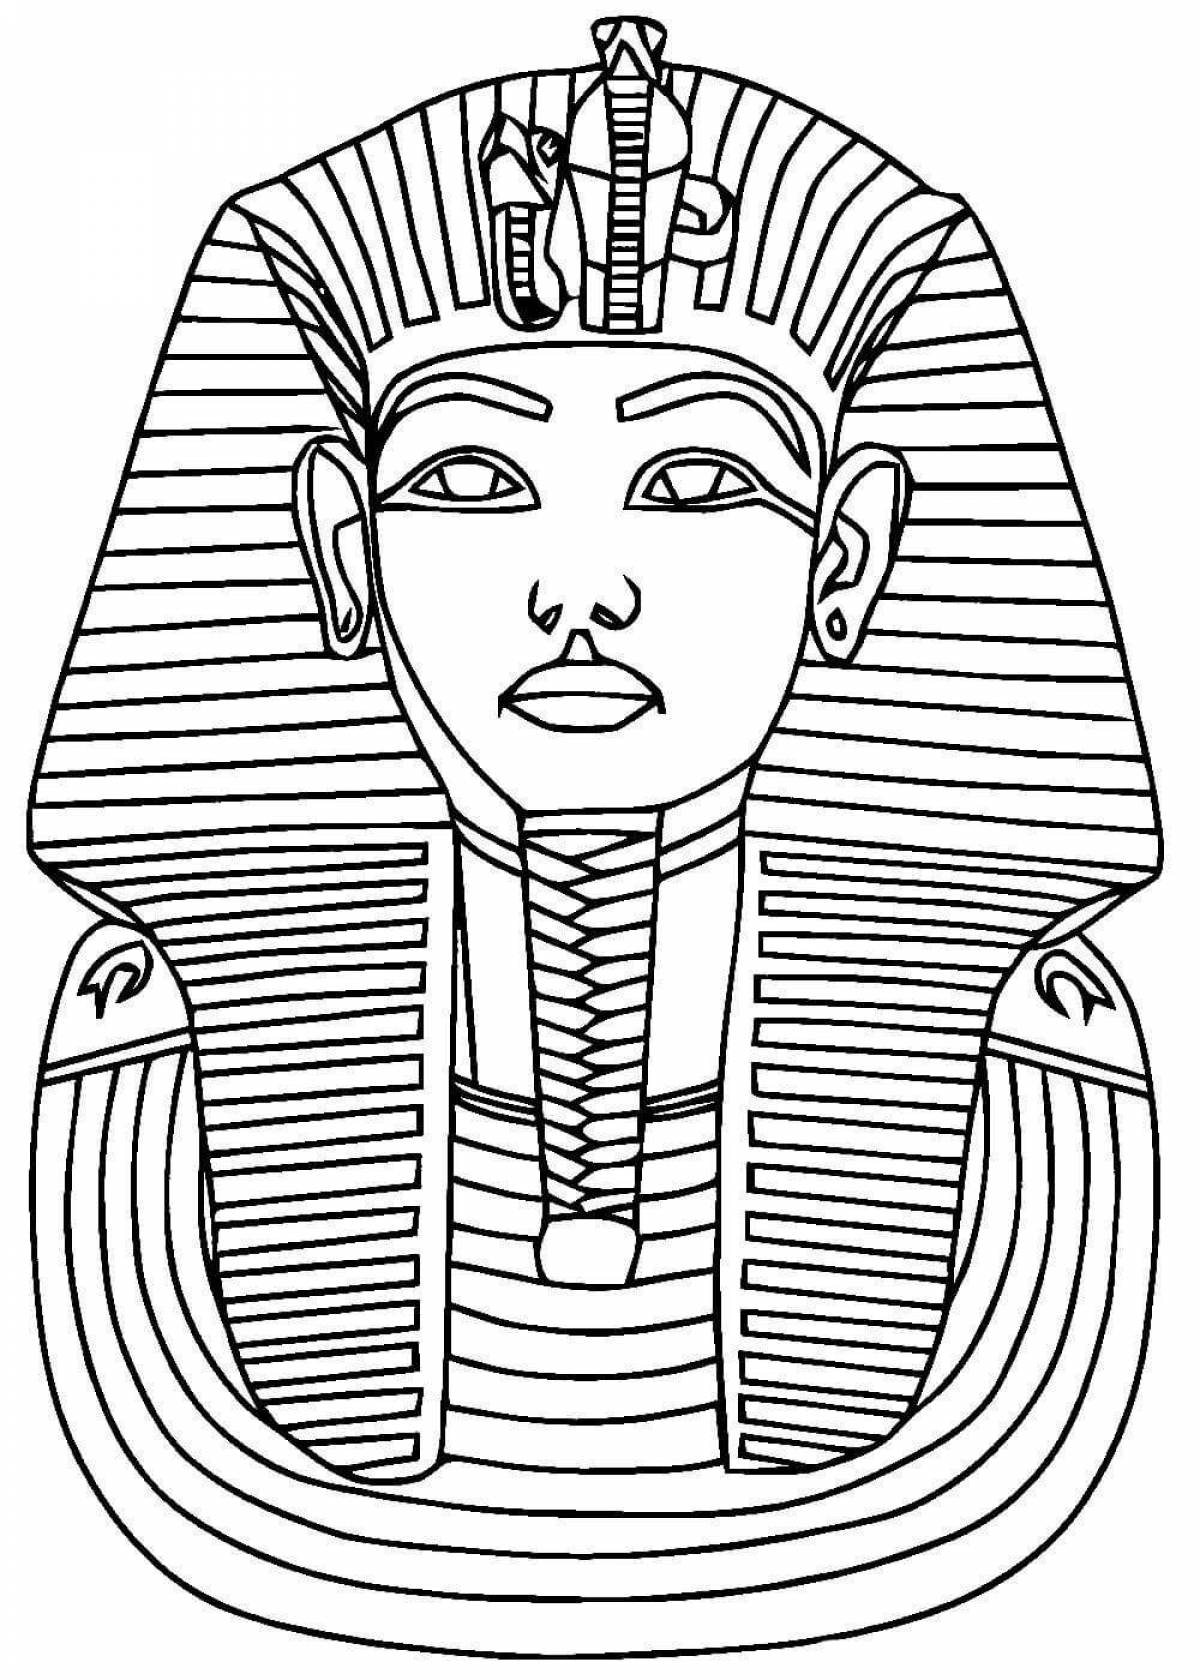 Coloring page amazing pharaoh mask